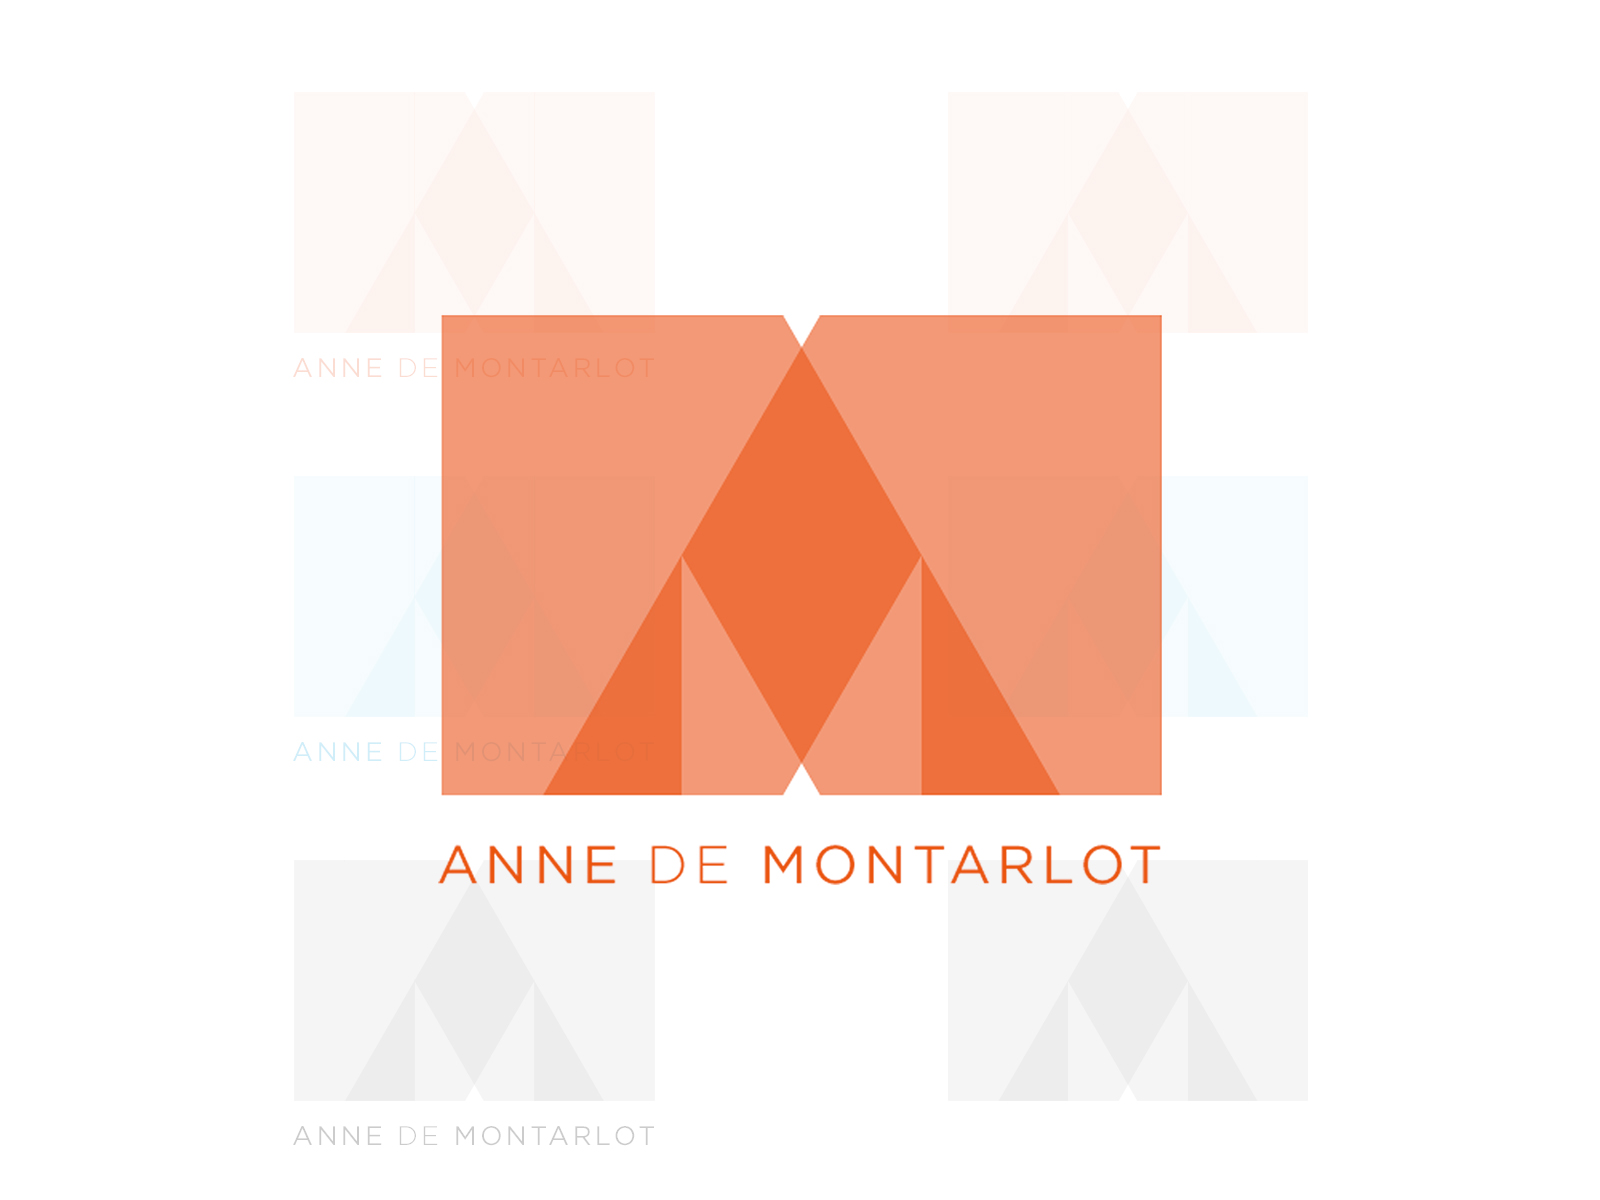 ANNE DE MONTARLOT BRANDING